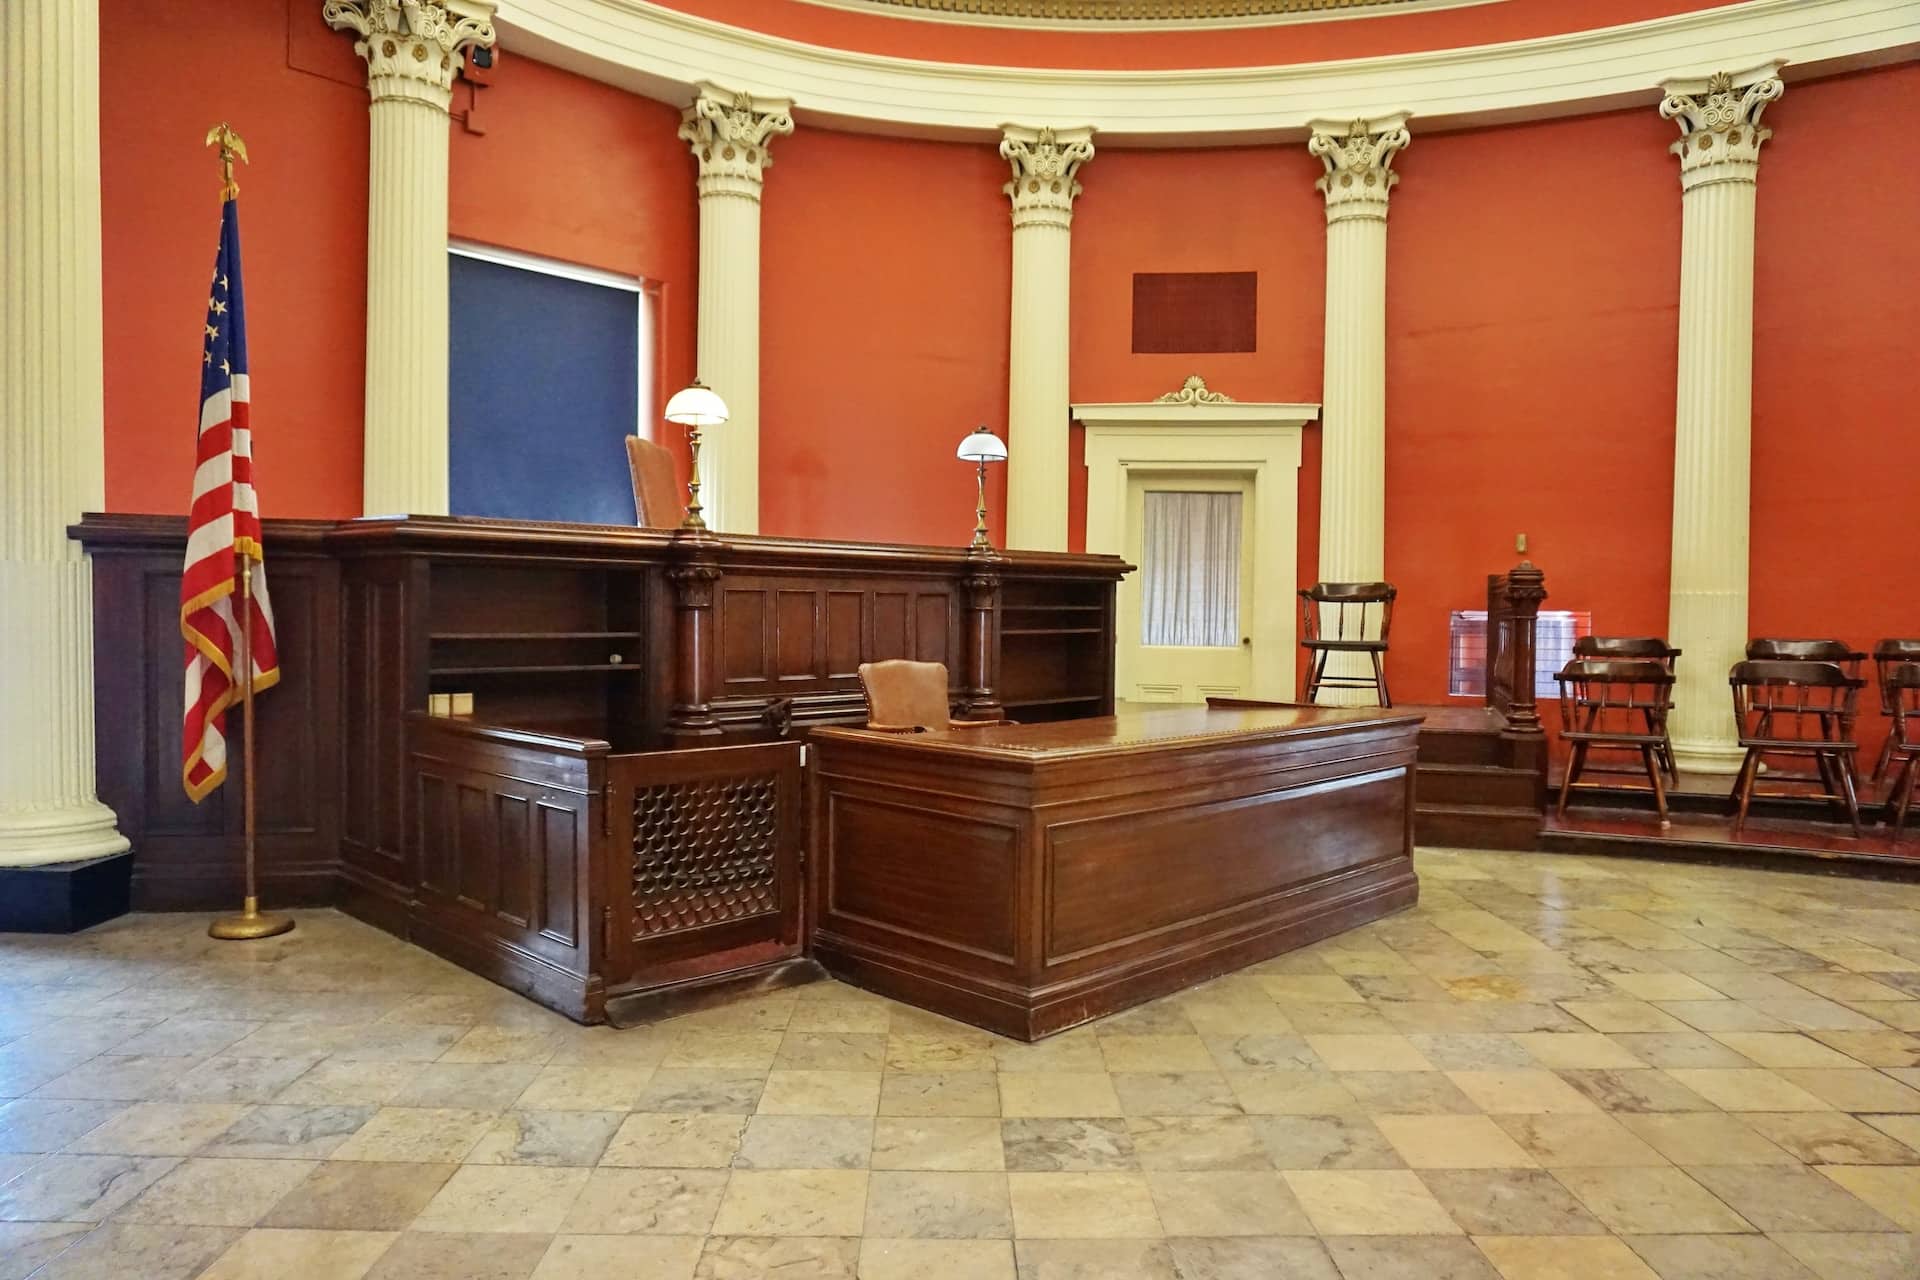 judges seat in a orange room - limited jurisdiction courts Arizona